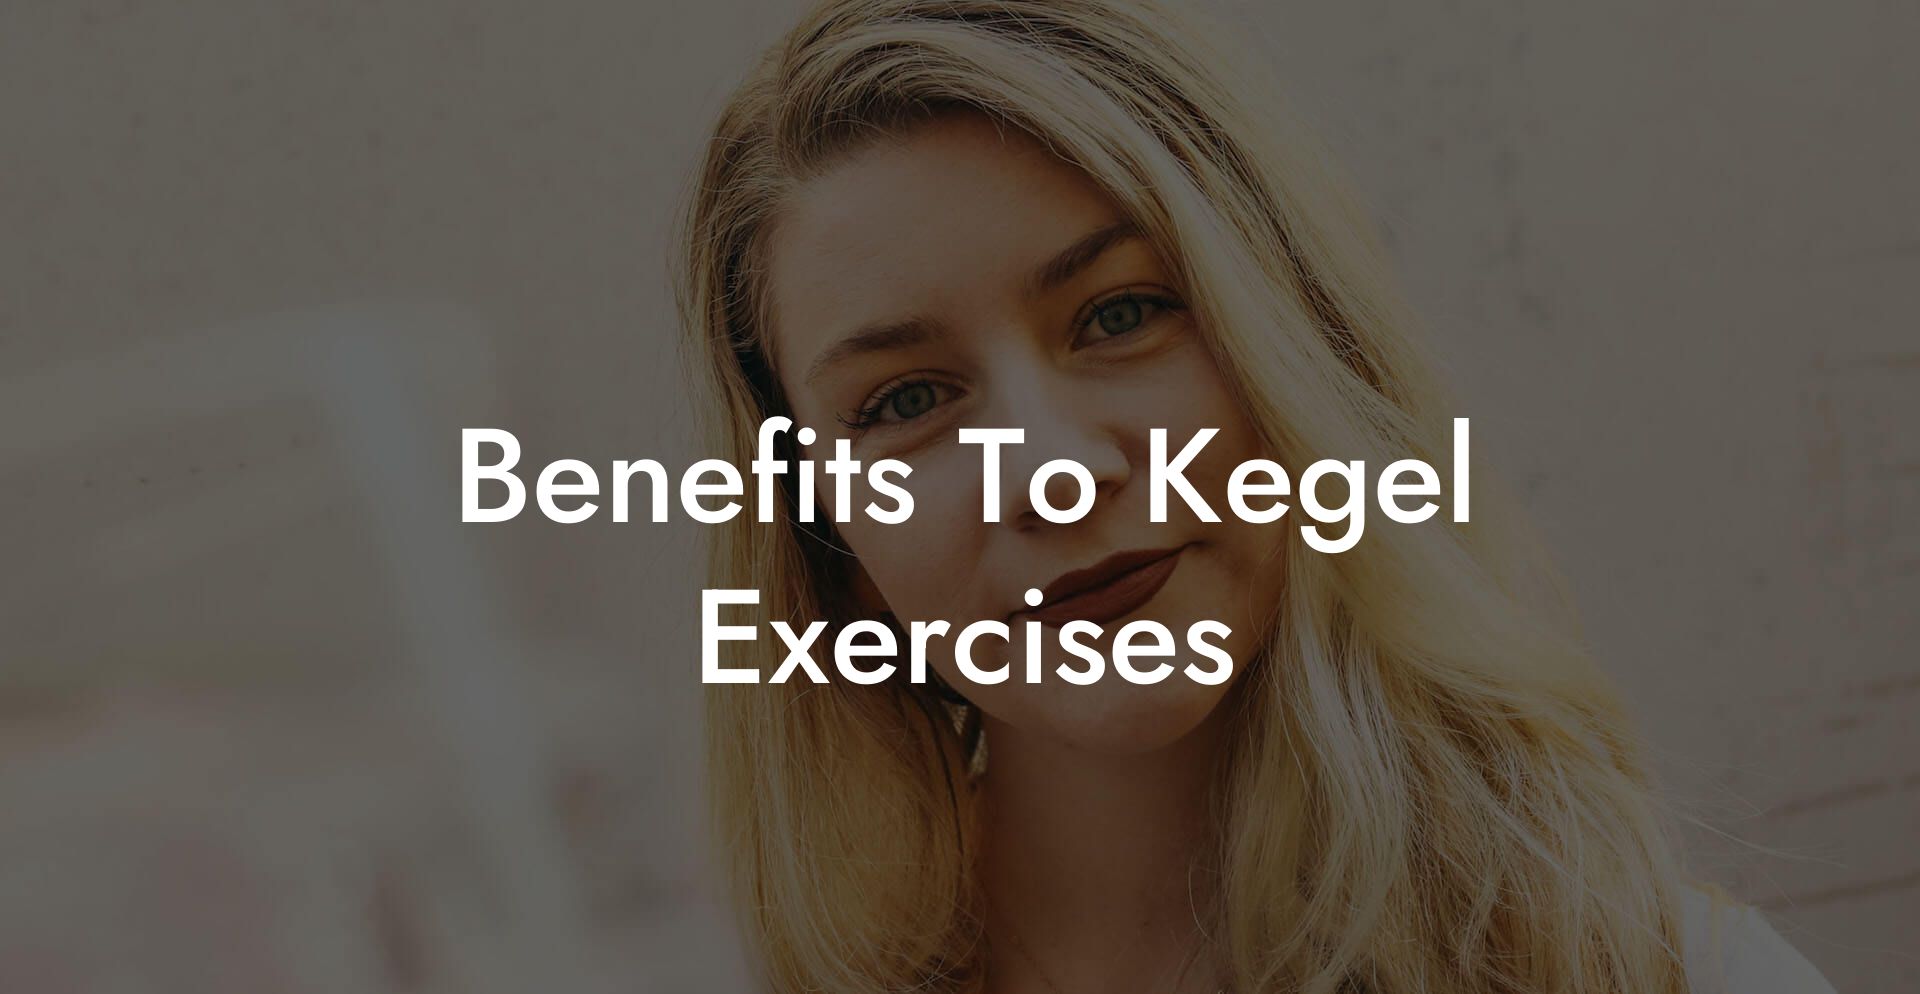 Benefits To Kegel Exercises